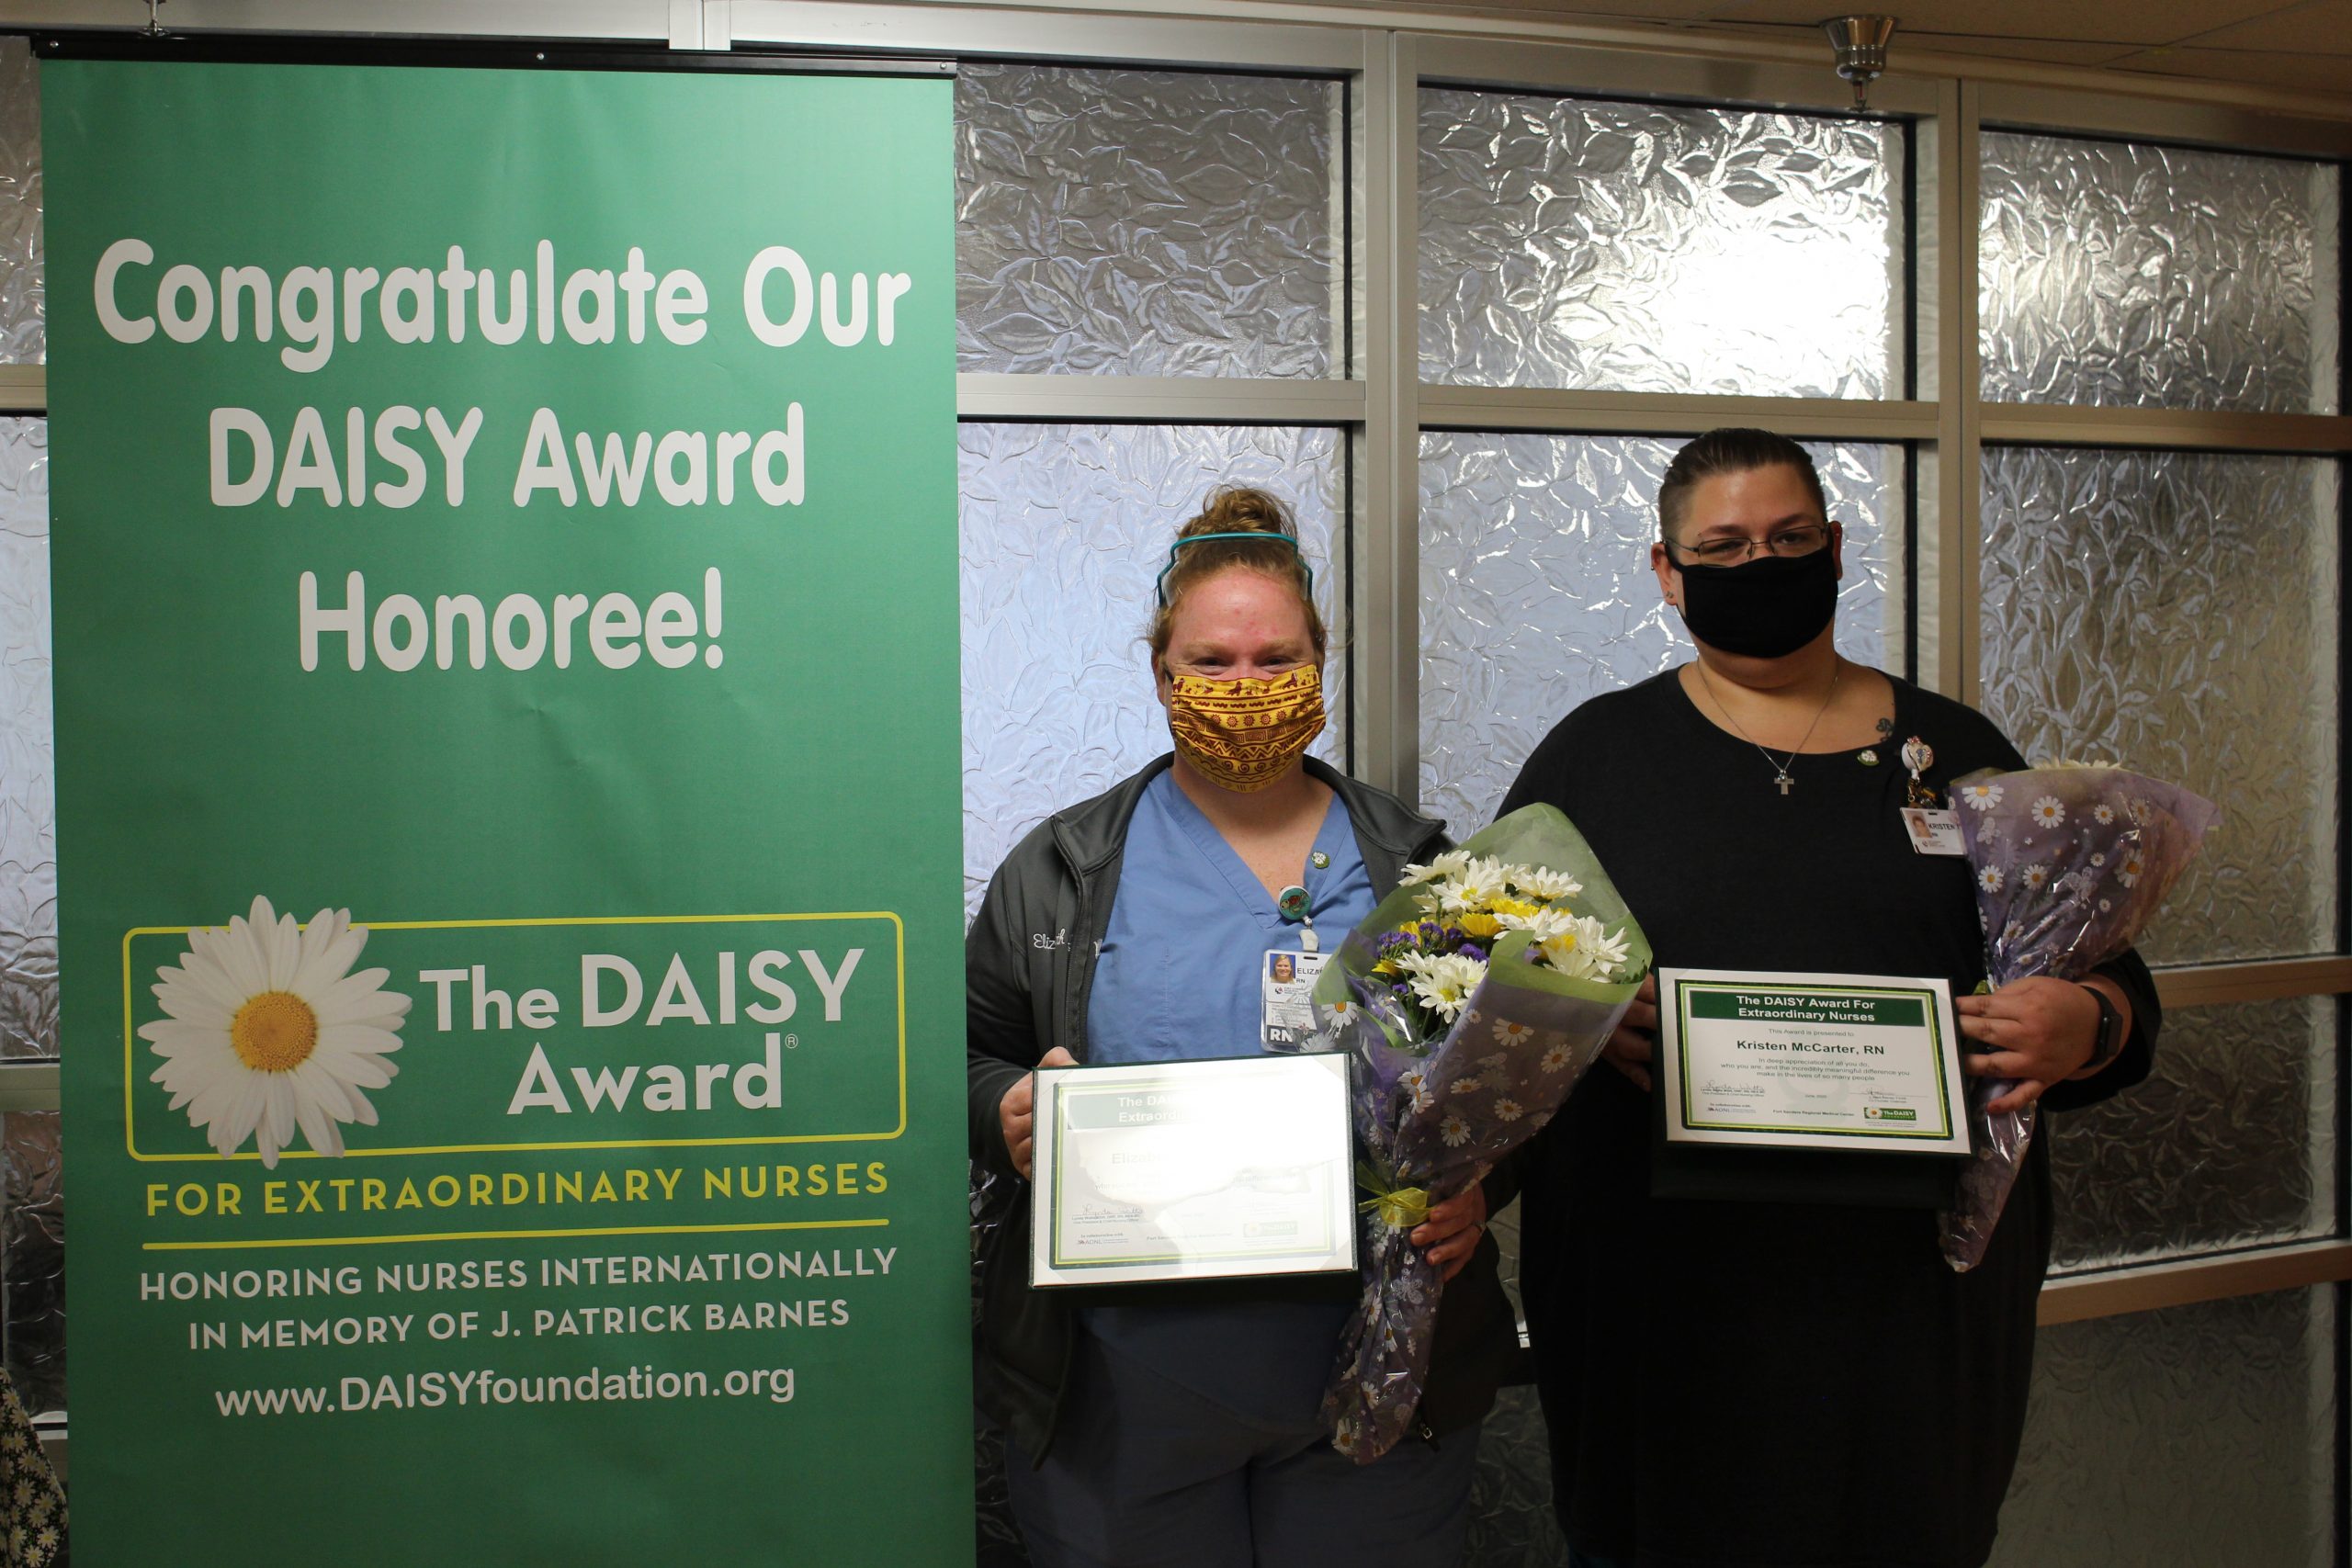 Elizabeth Cannon and Kristen McCarter receiving their DAISY awards.